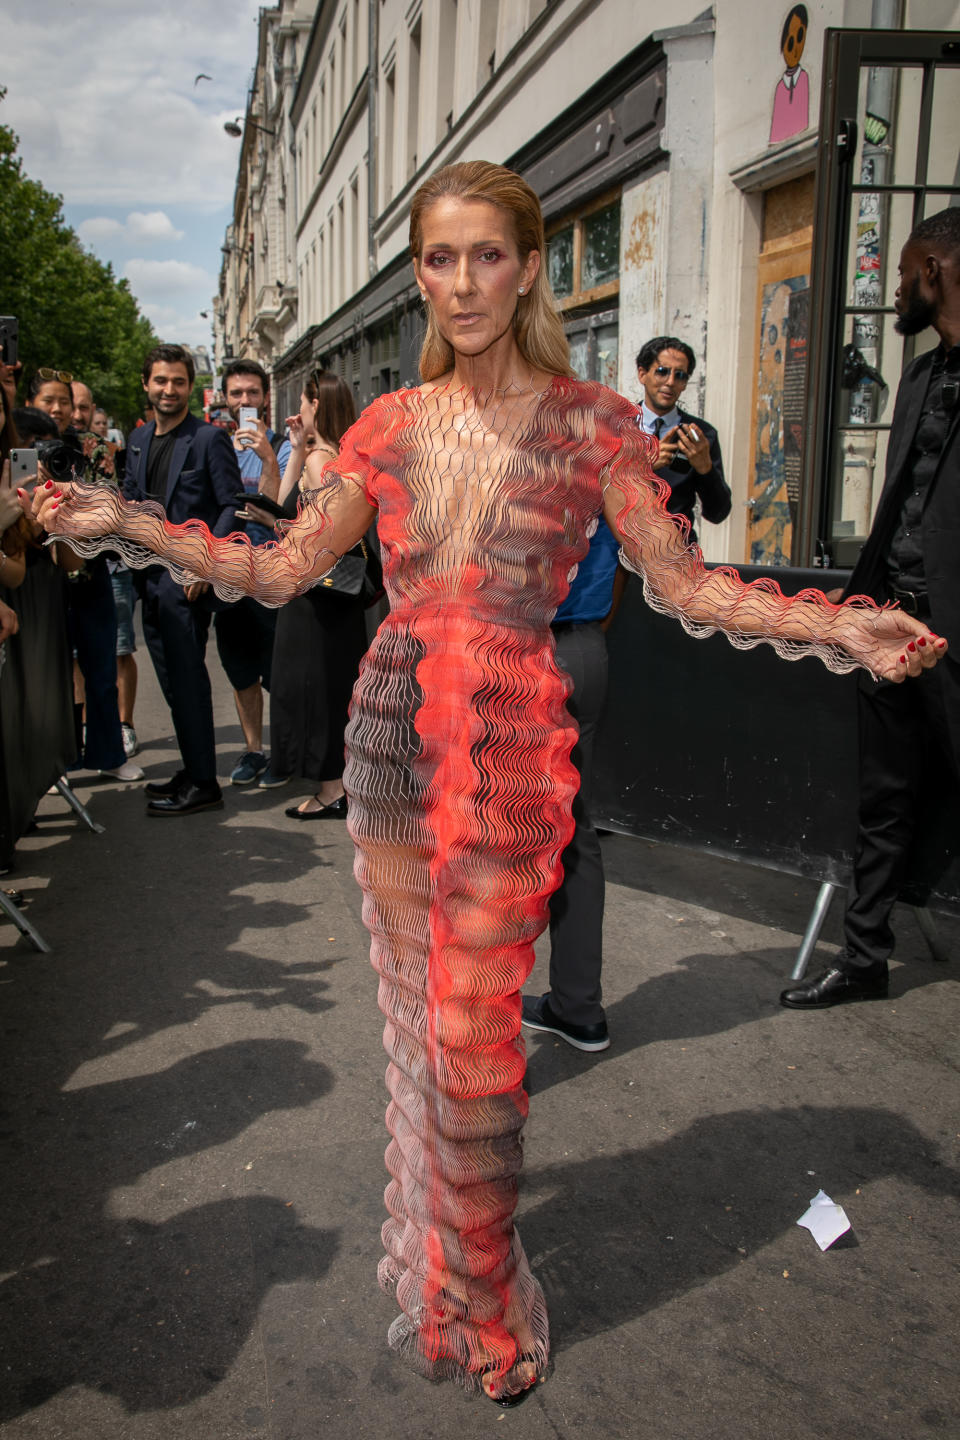 Singer Celine Dion is seen on July 01, 2019 in Paris, France. [Photo: Getty]